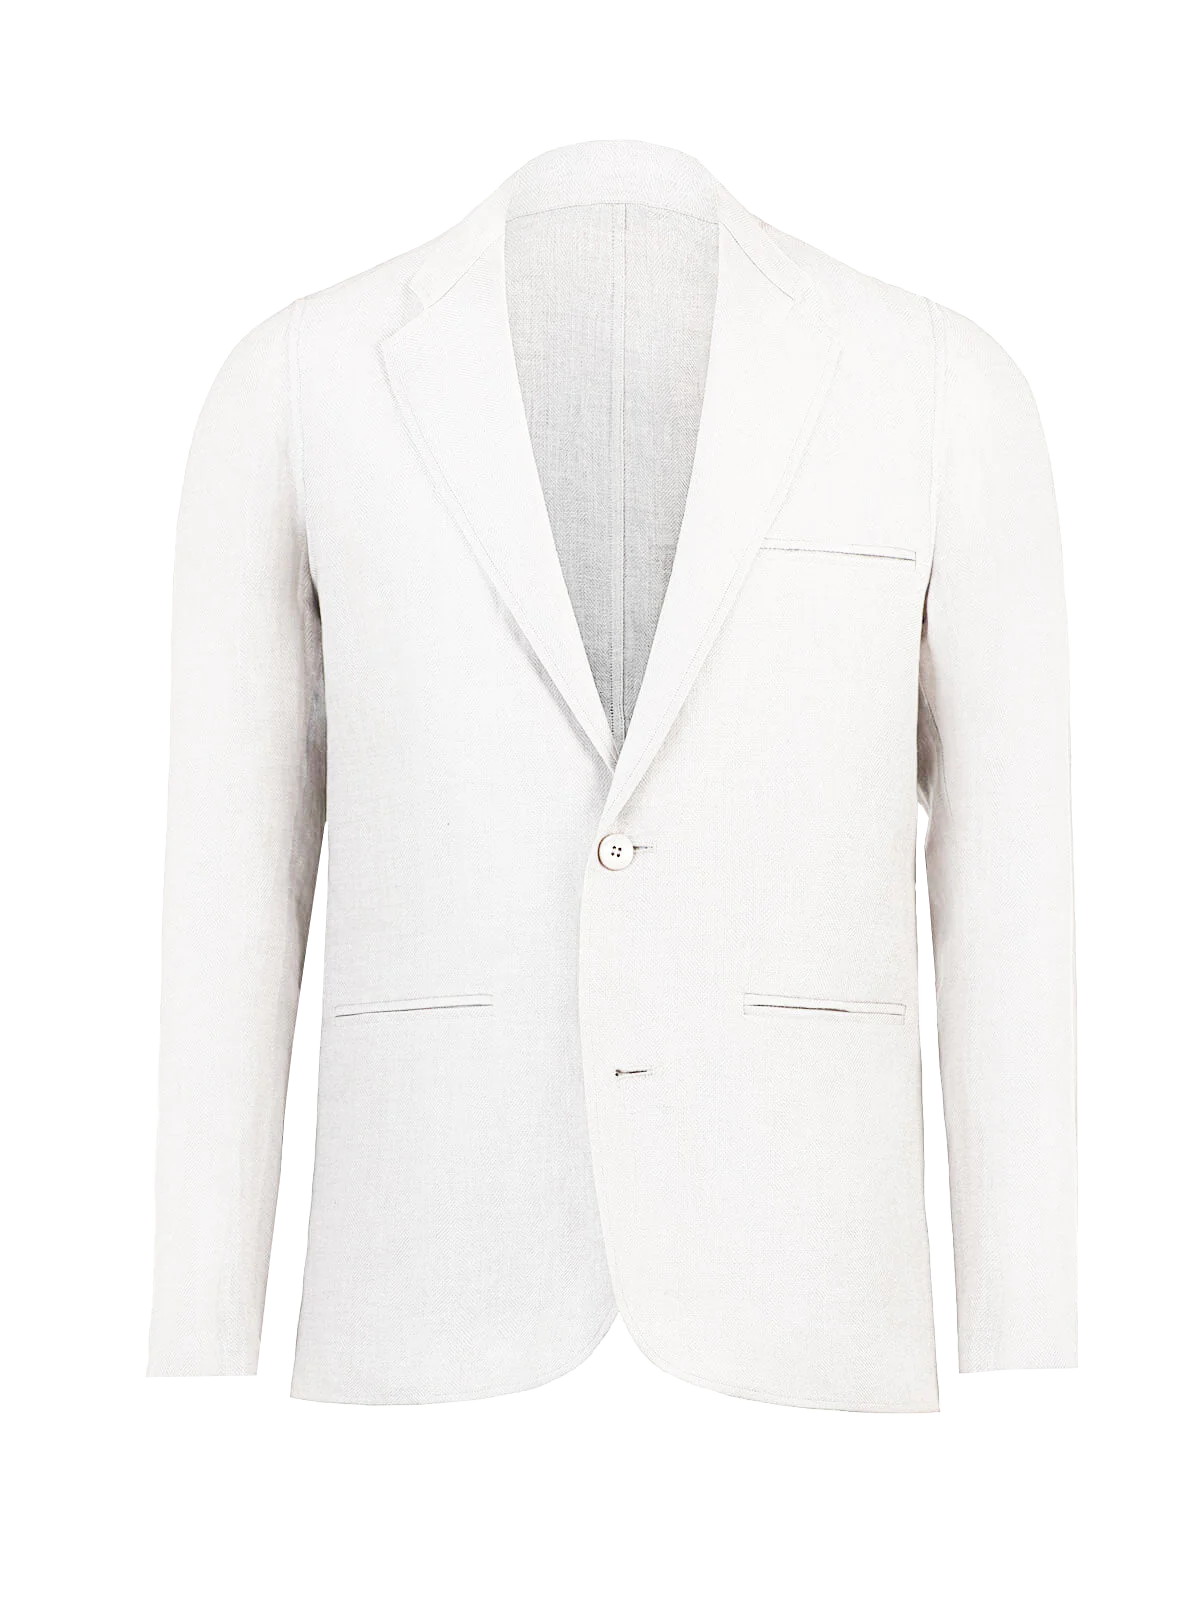 Giacca Sud Man 100% Capri white linen jacket front